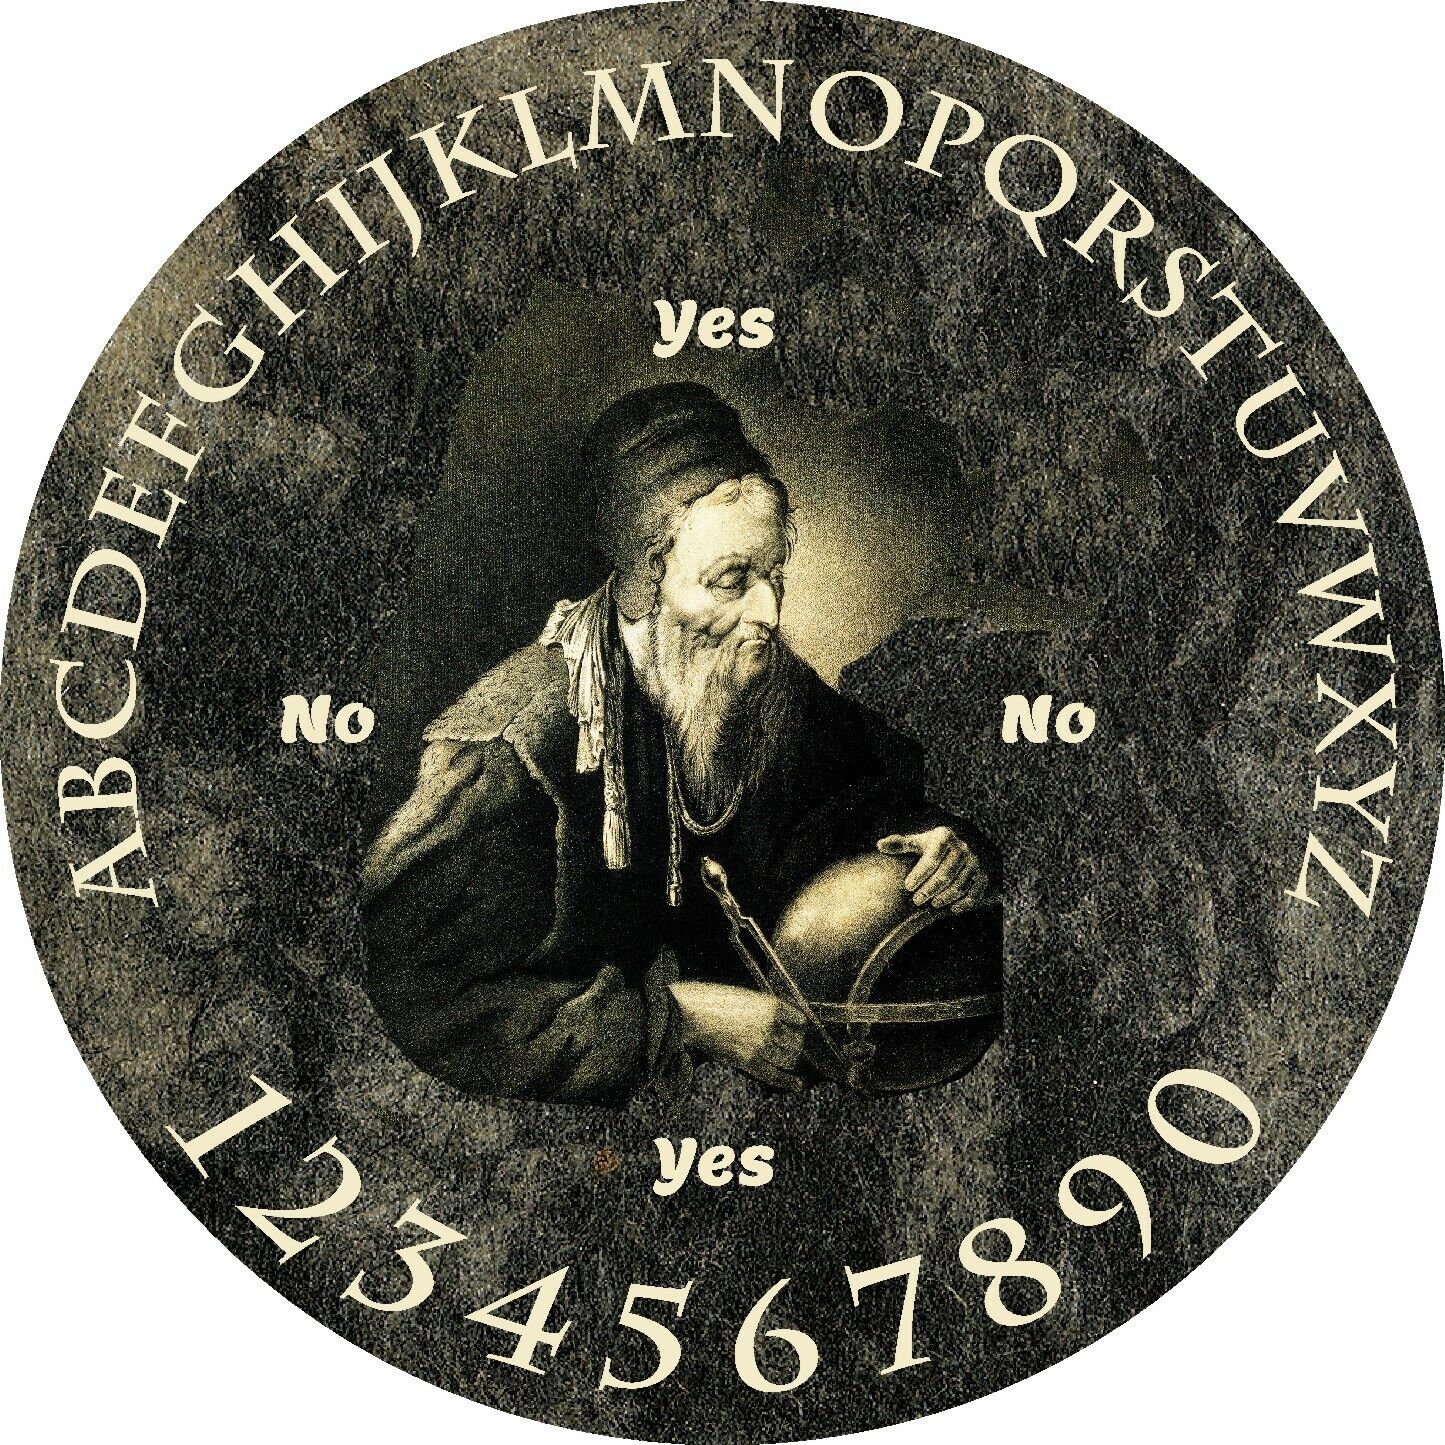 5" Pendulum Board - Dowsing Divination Message Board "nostradamus"